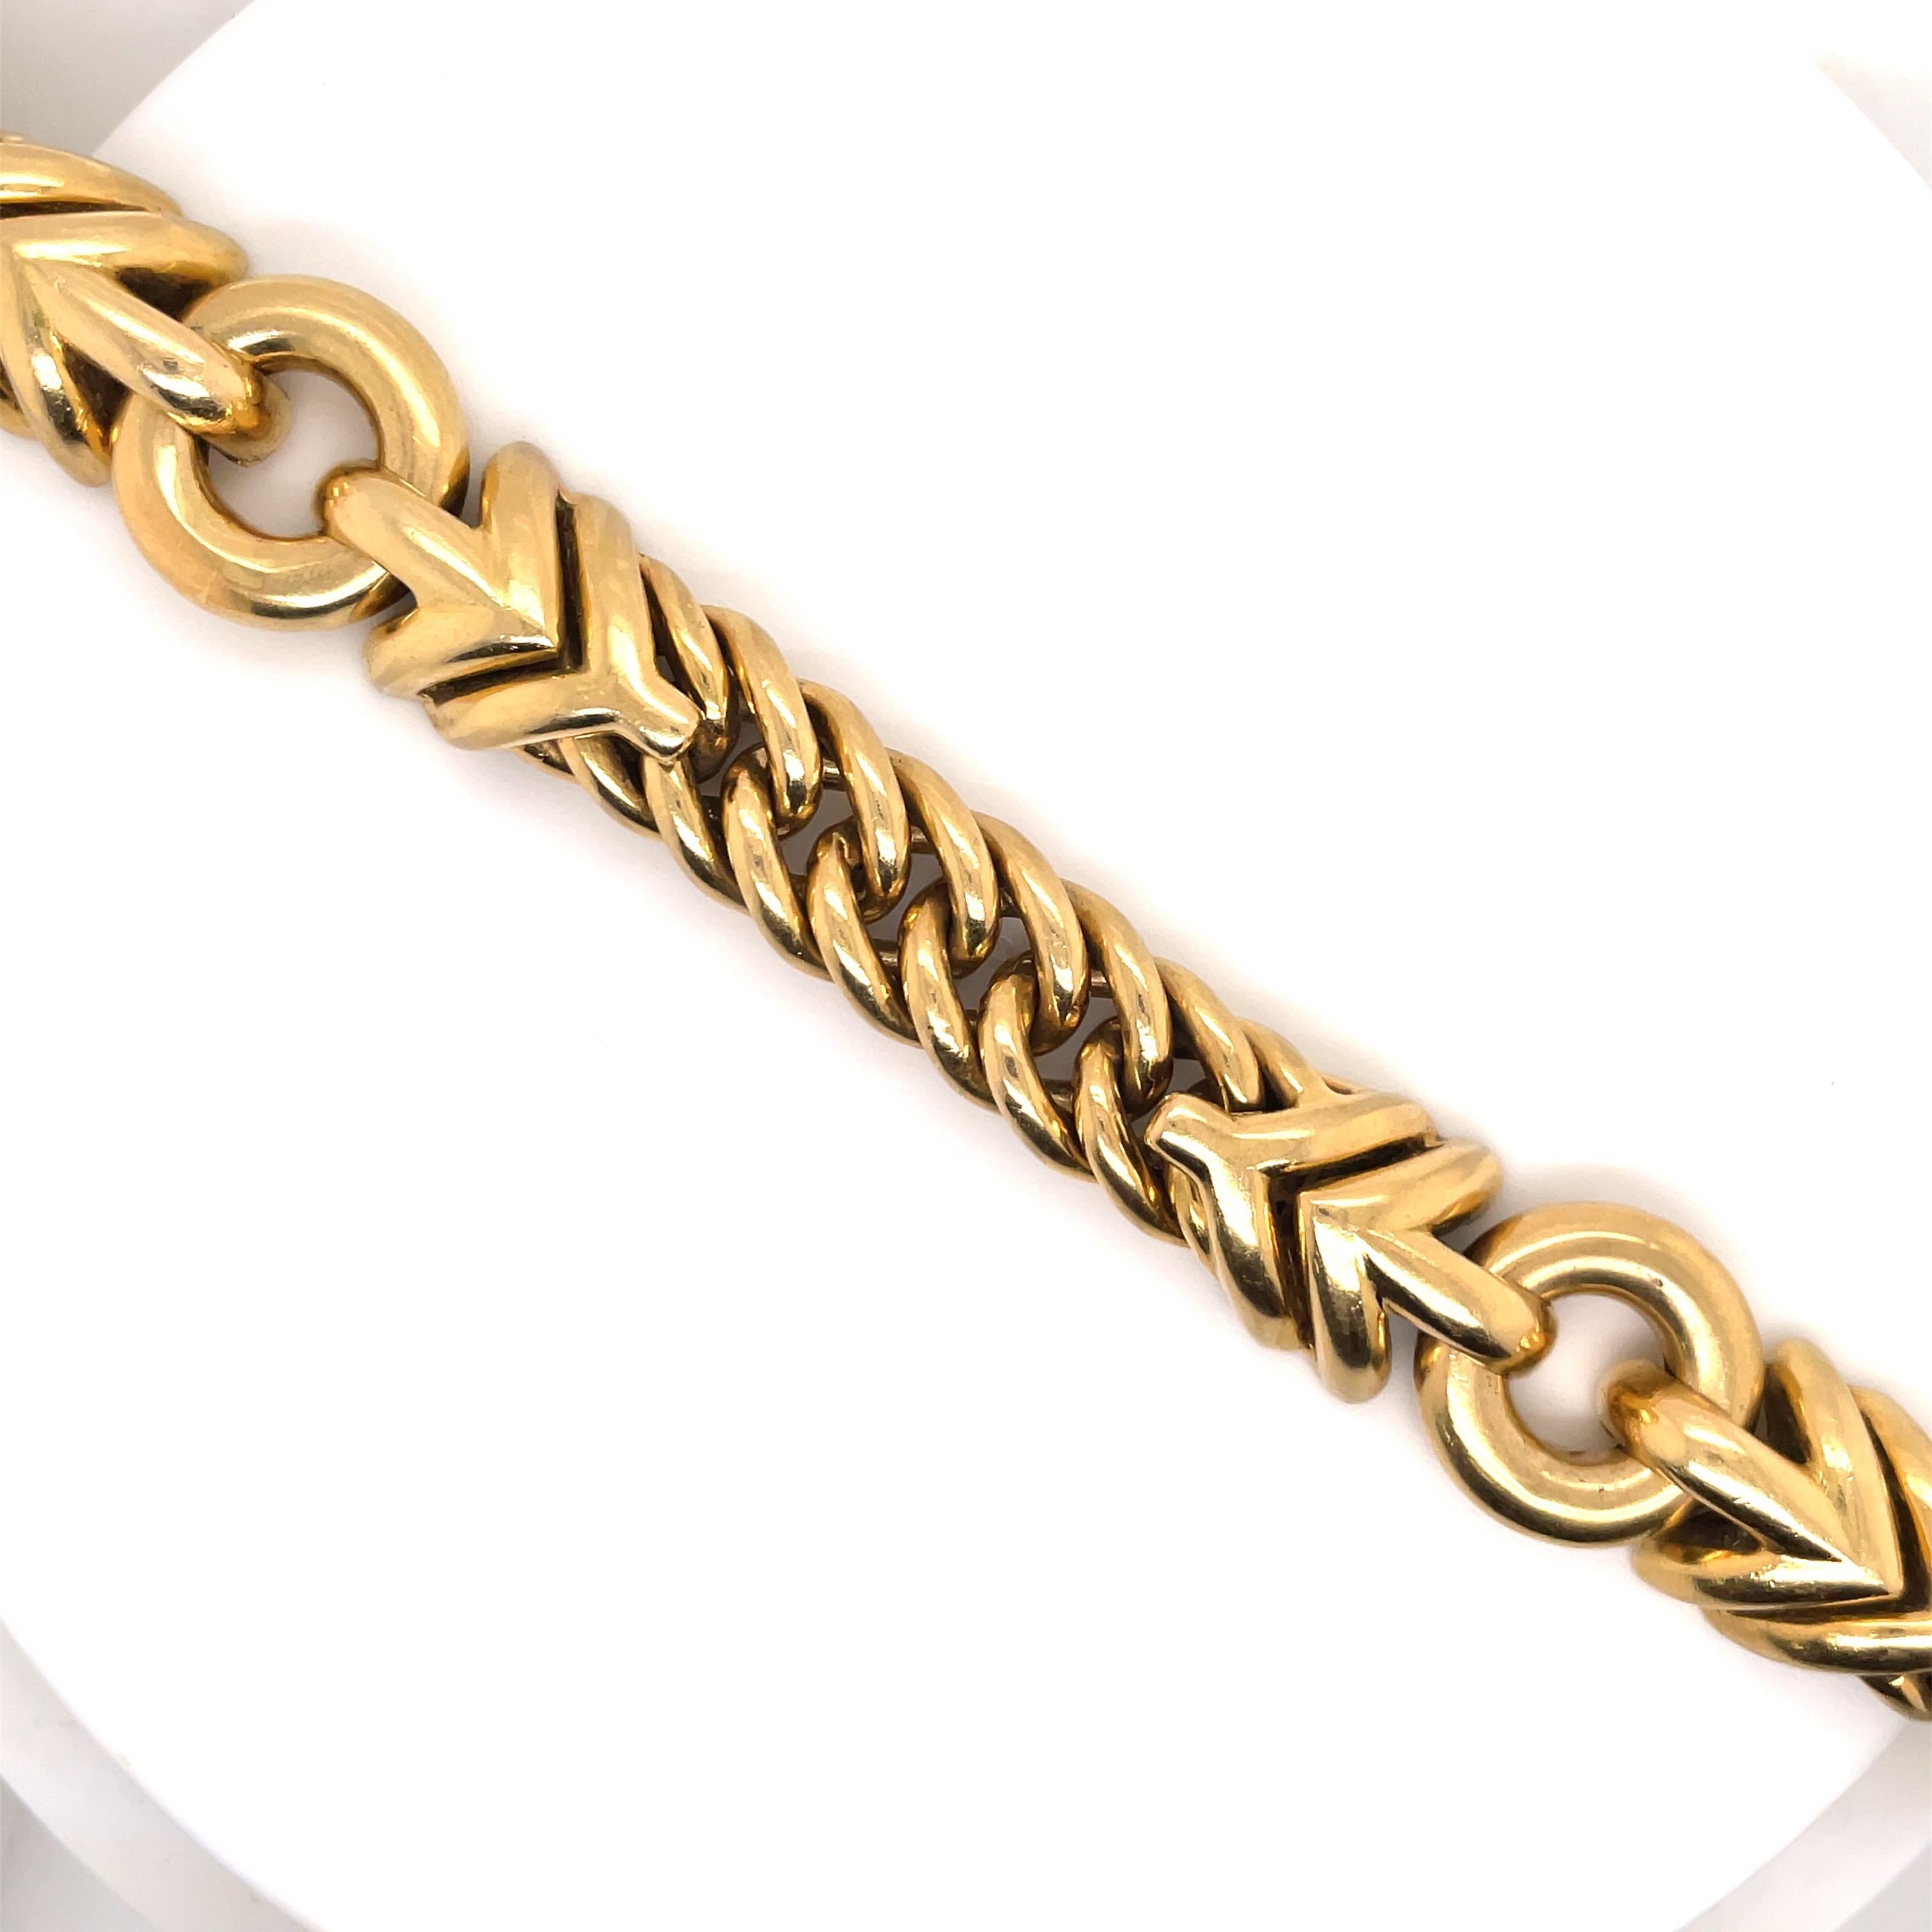 18 Karat Yellow Gold link bracelet weighing 78.6 grams. 
Stamped DORFMAN ITALY 18K
Nice Heavy Bracelet.
More Link Bracelets In Stock